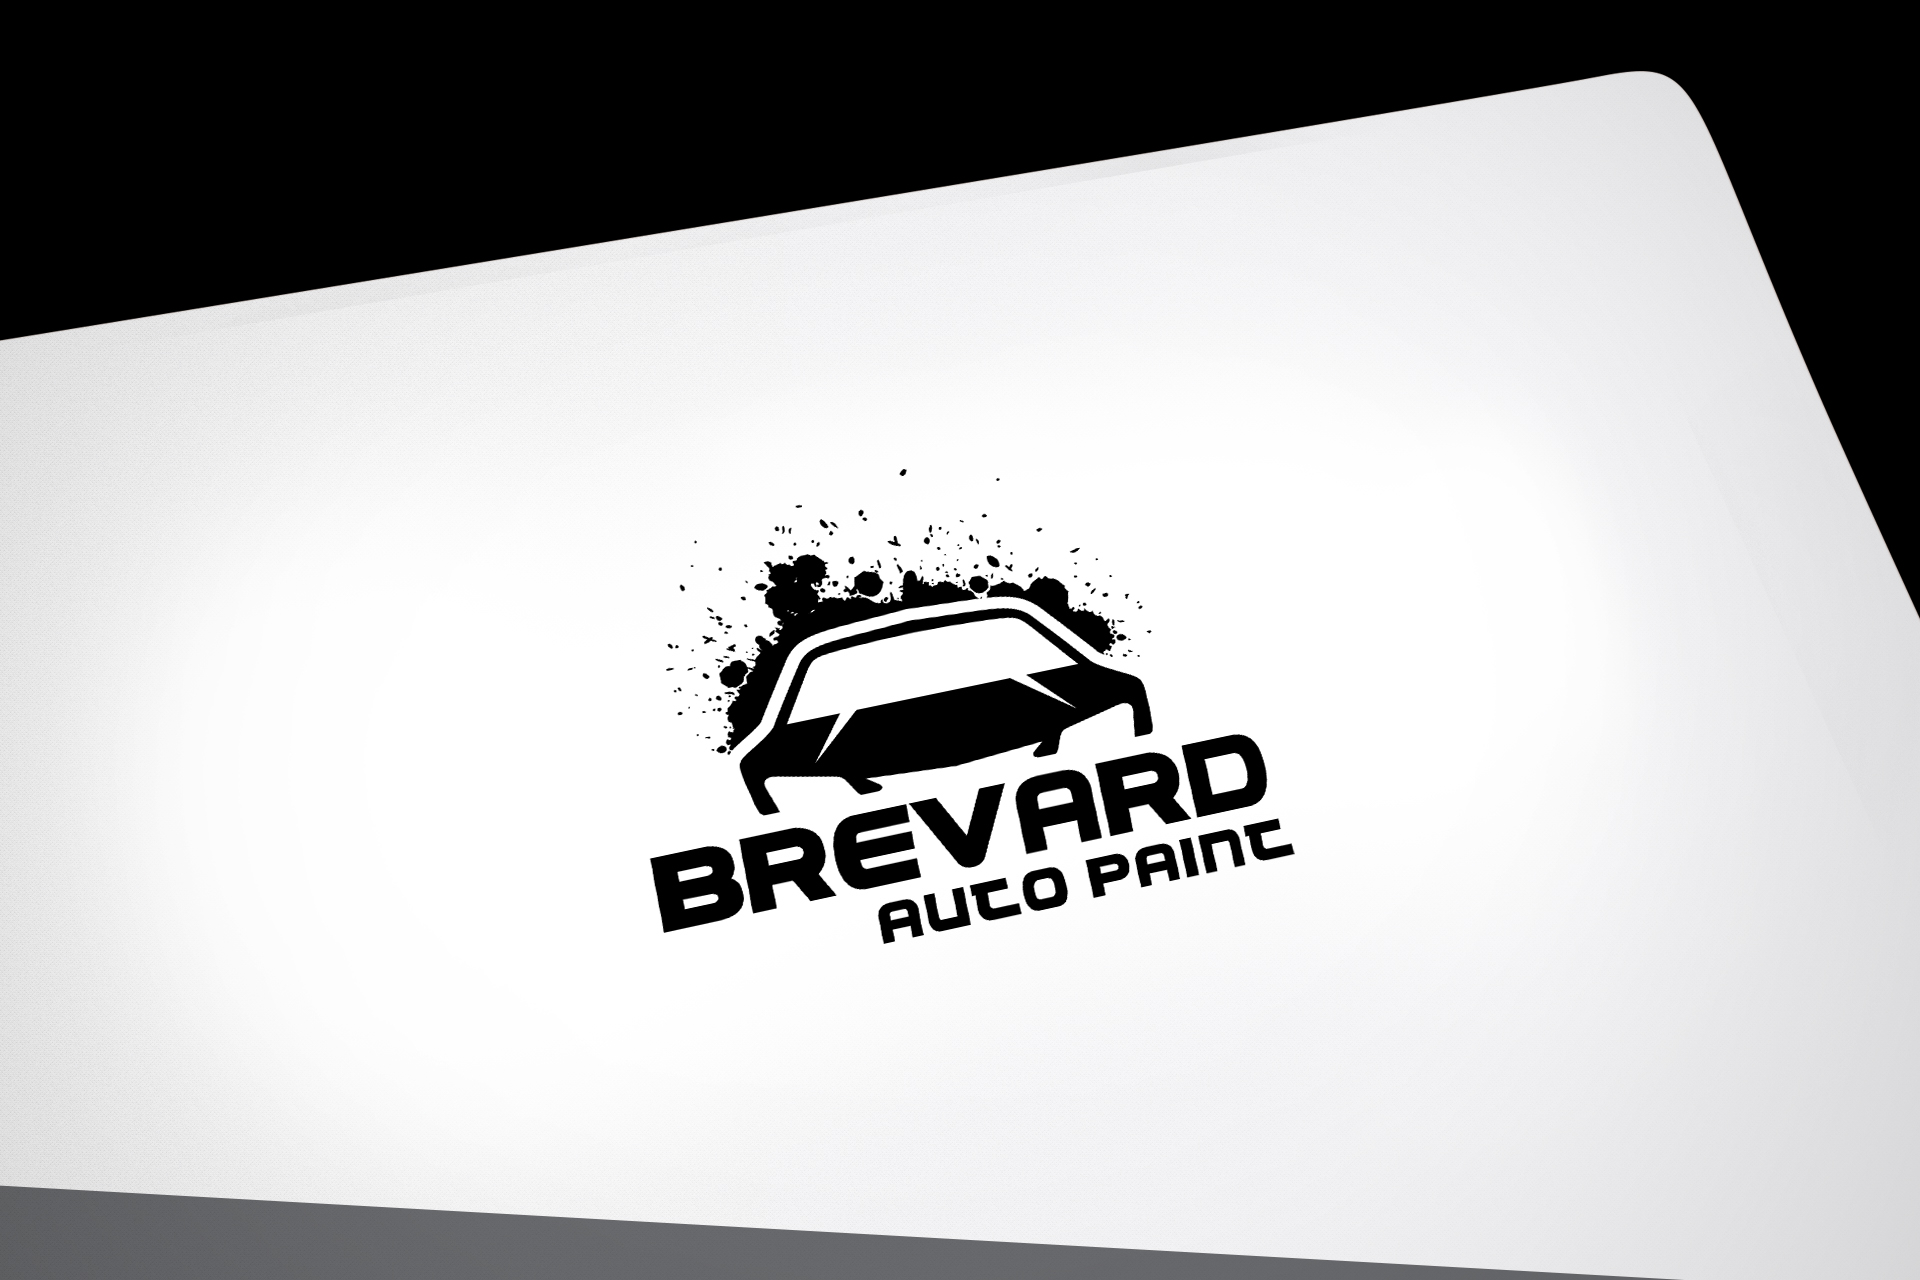 Brevard Auto Paint Design #5